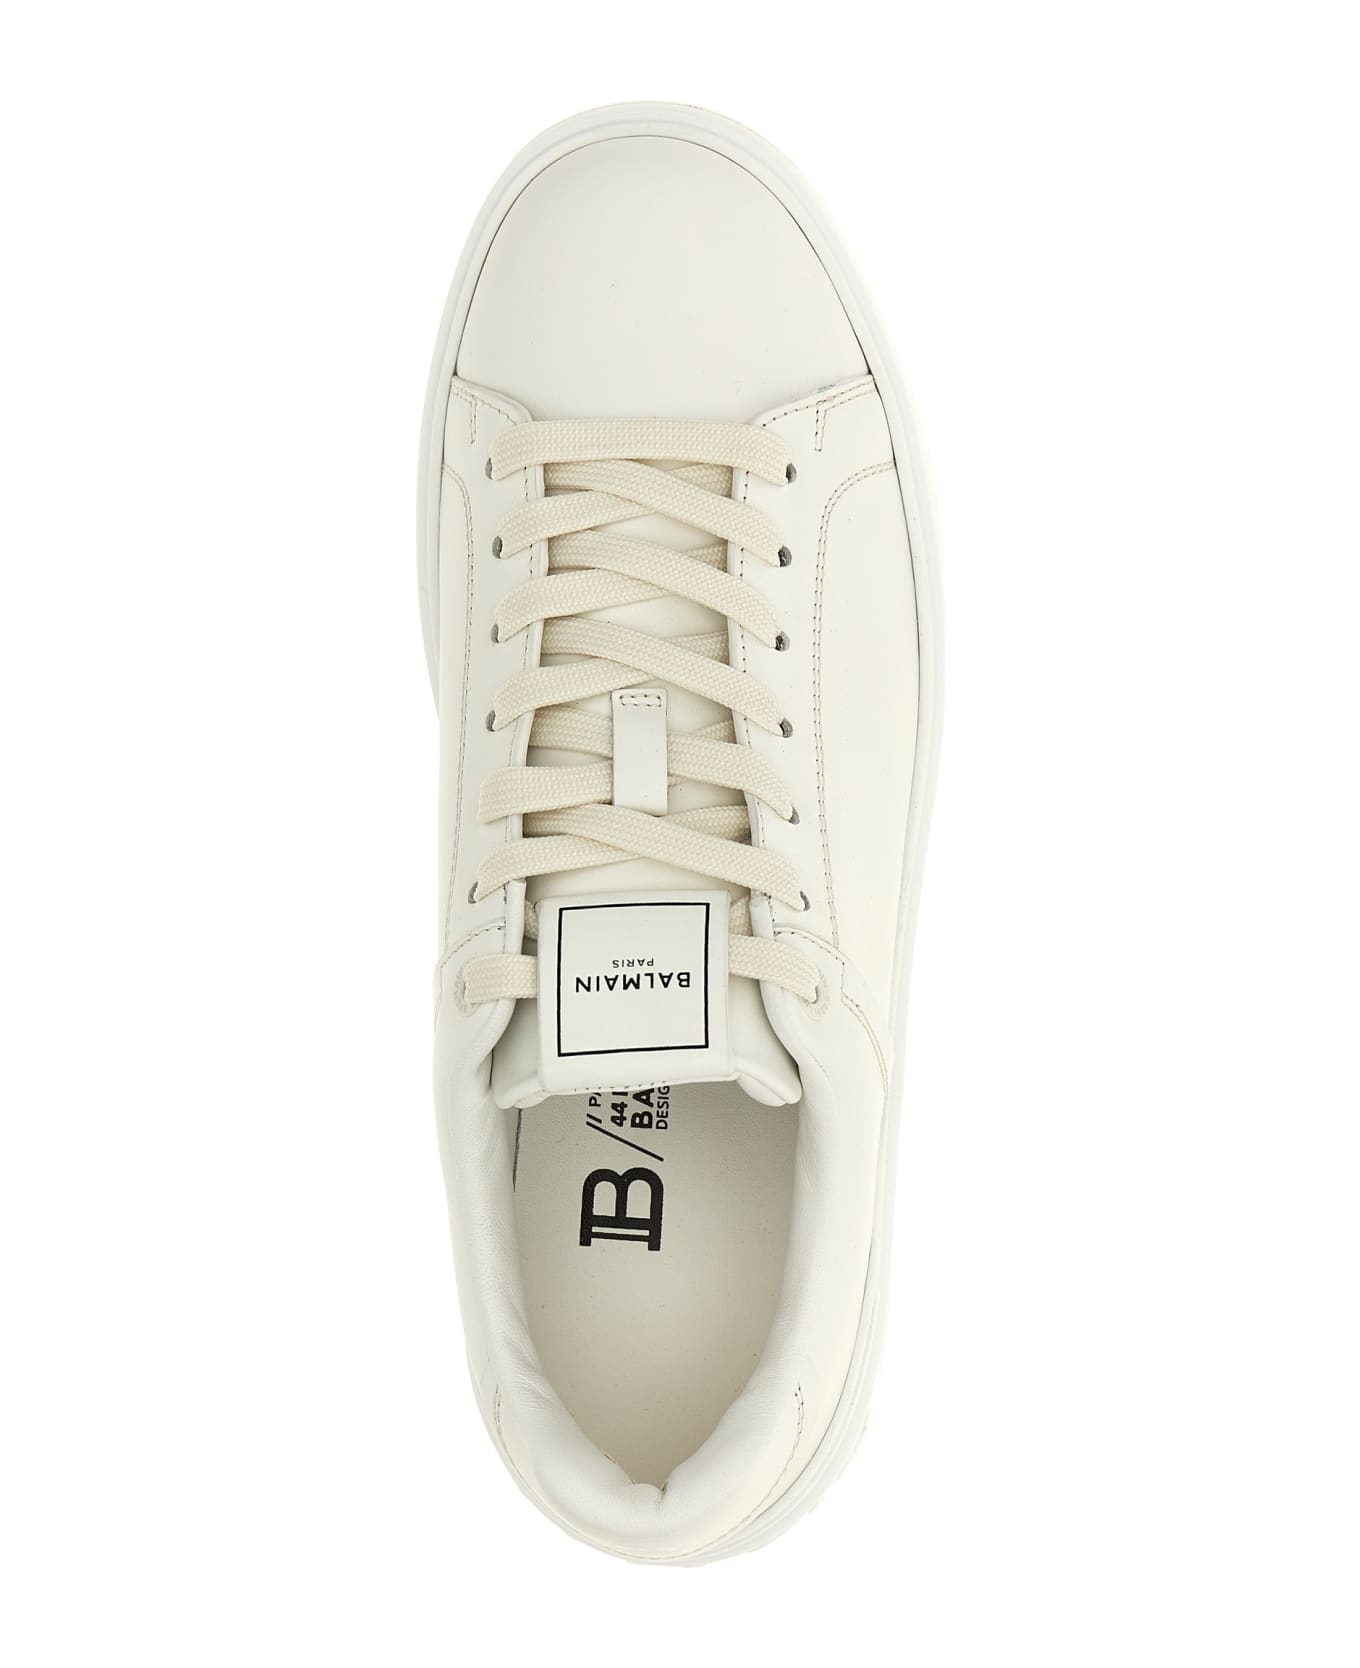 Balmain 'b-court' Sneakers - white スニーカー